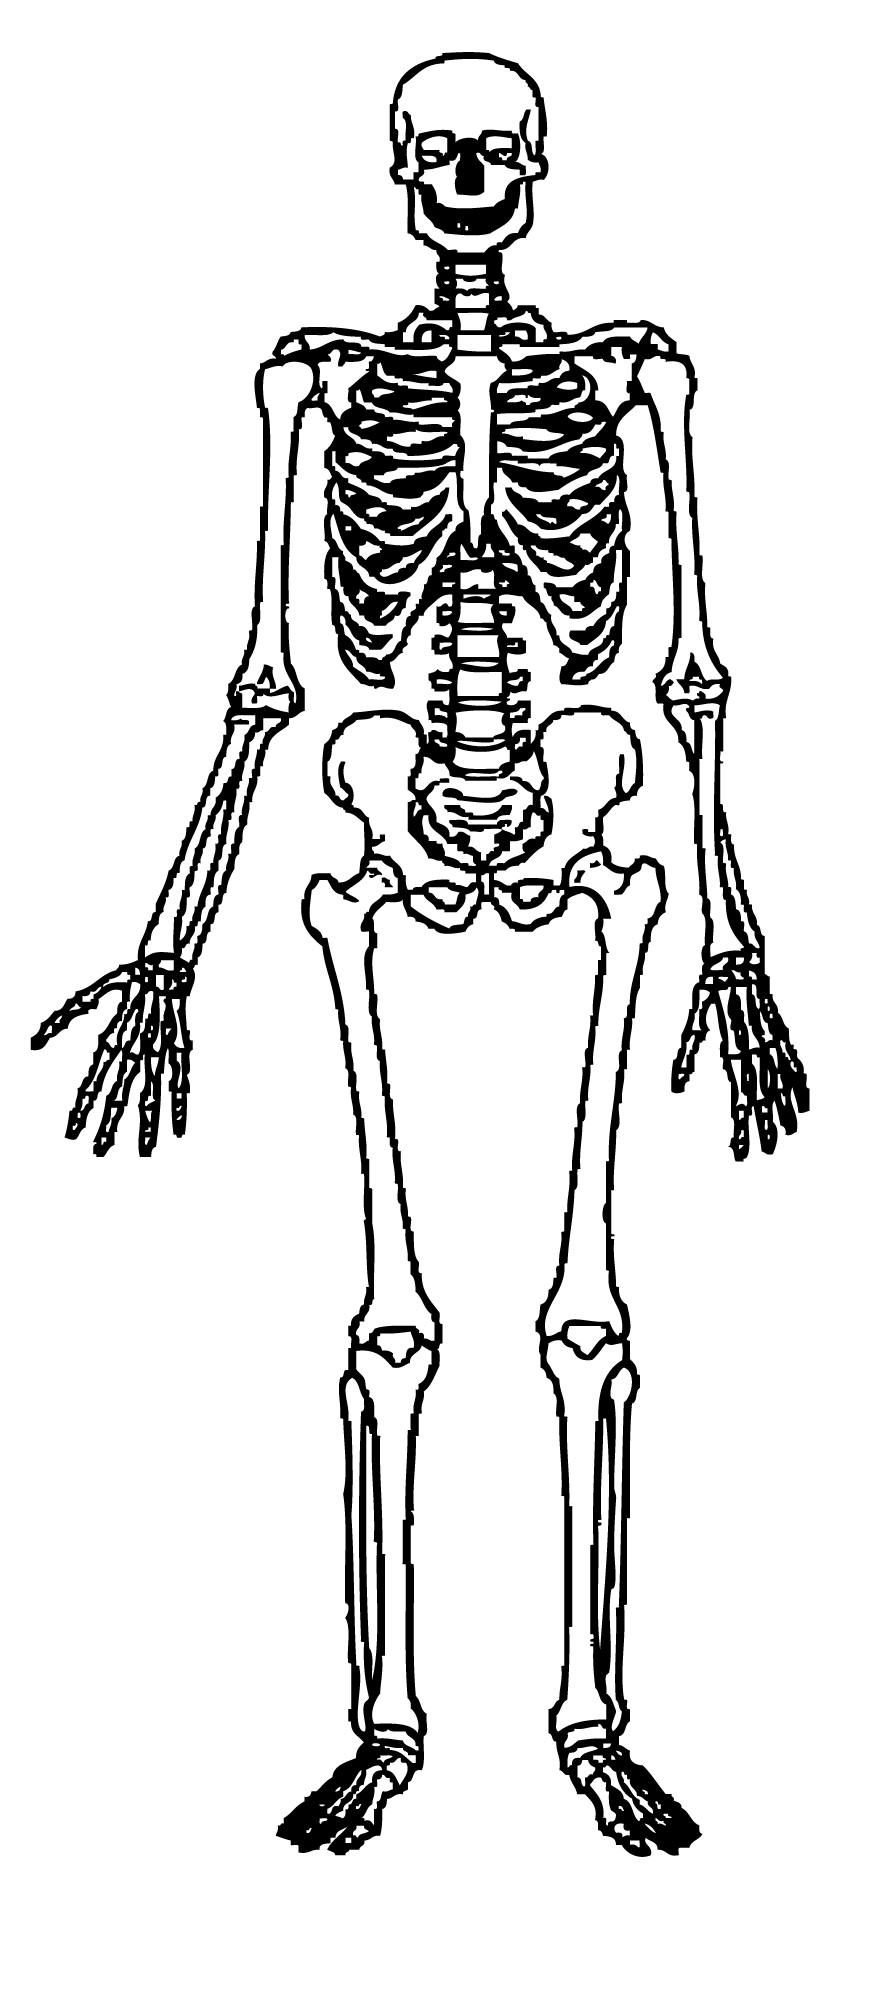 Skeleton clipart free download clip art on 4